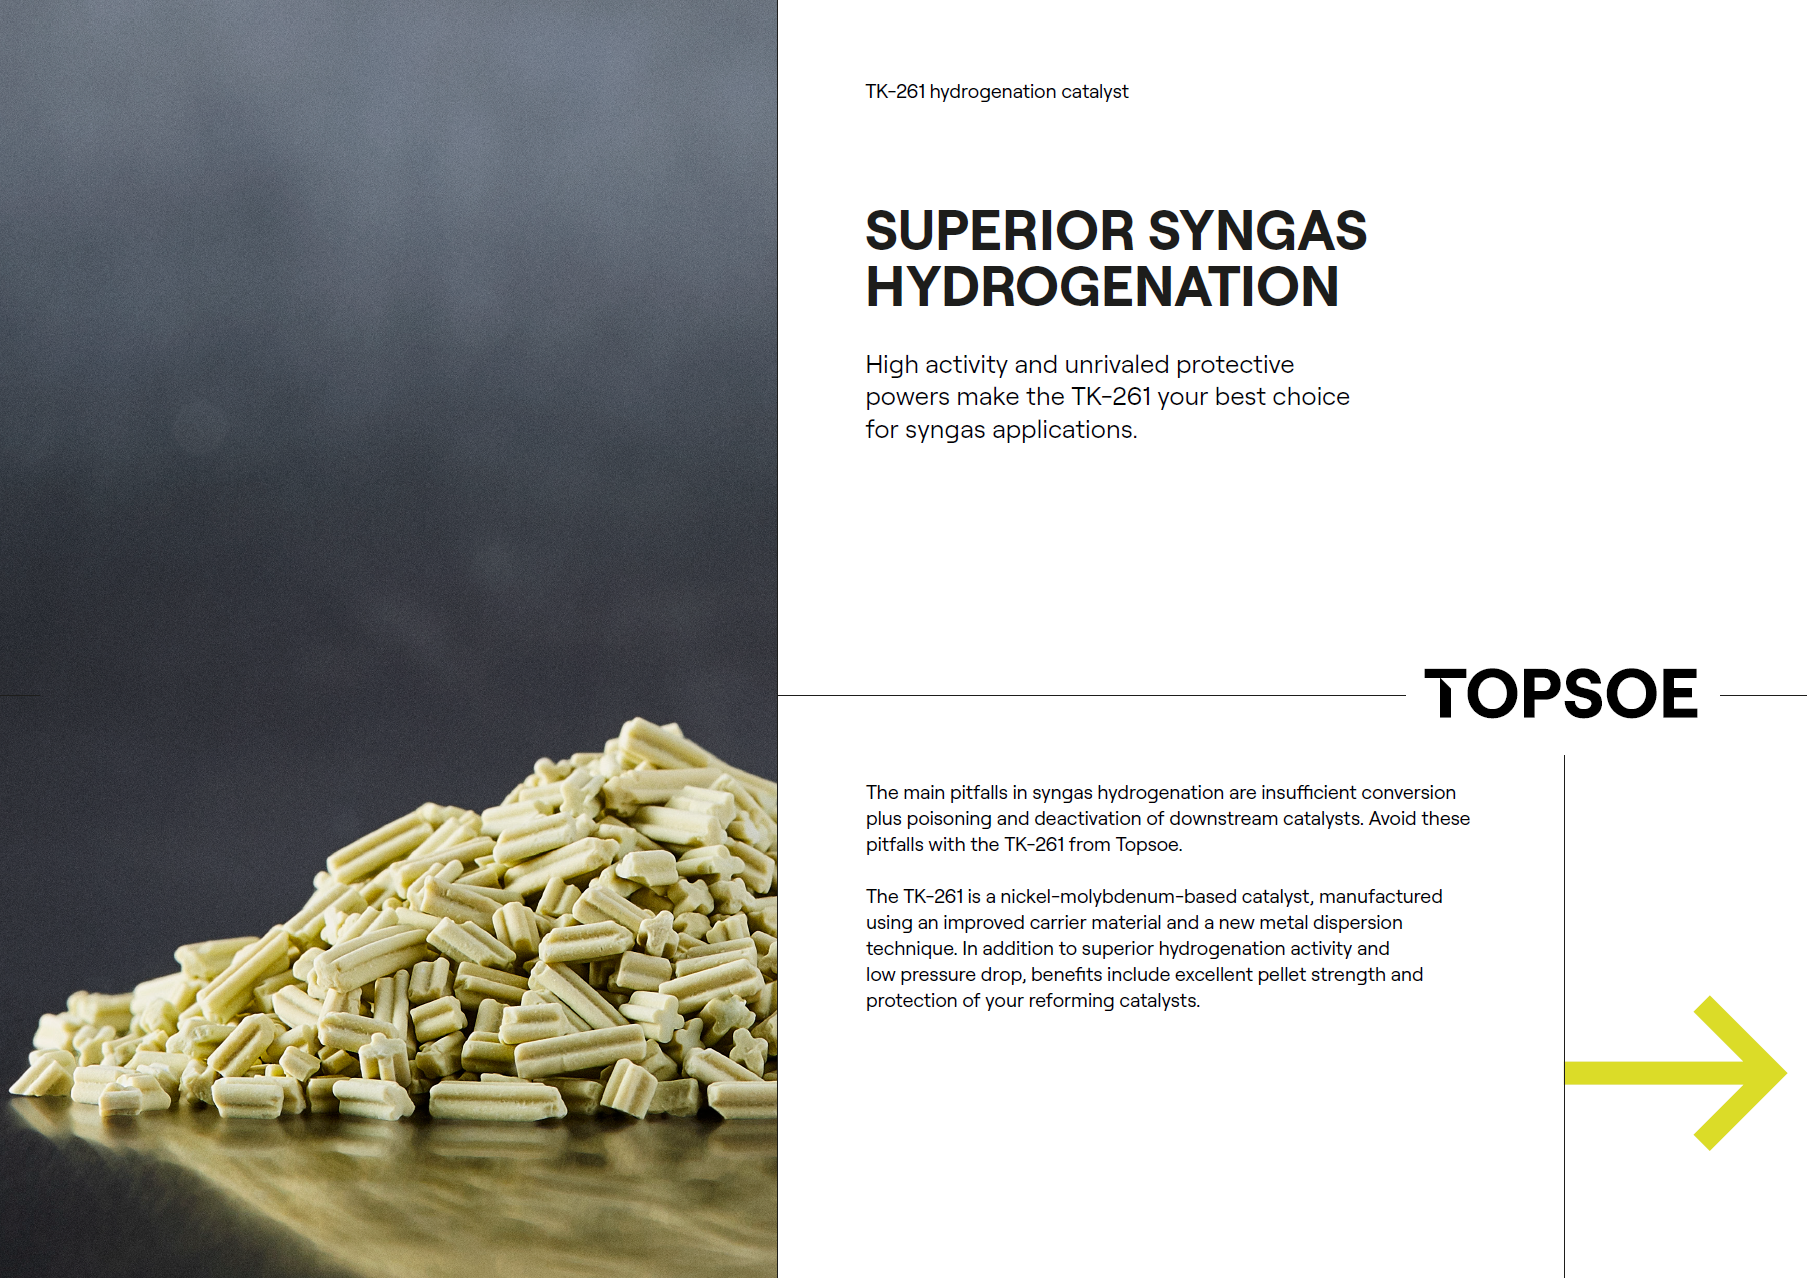 Superior syngas hydrogenation